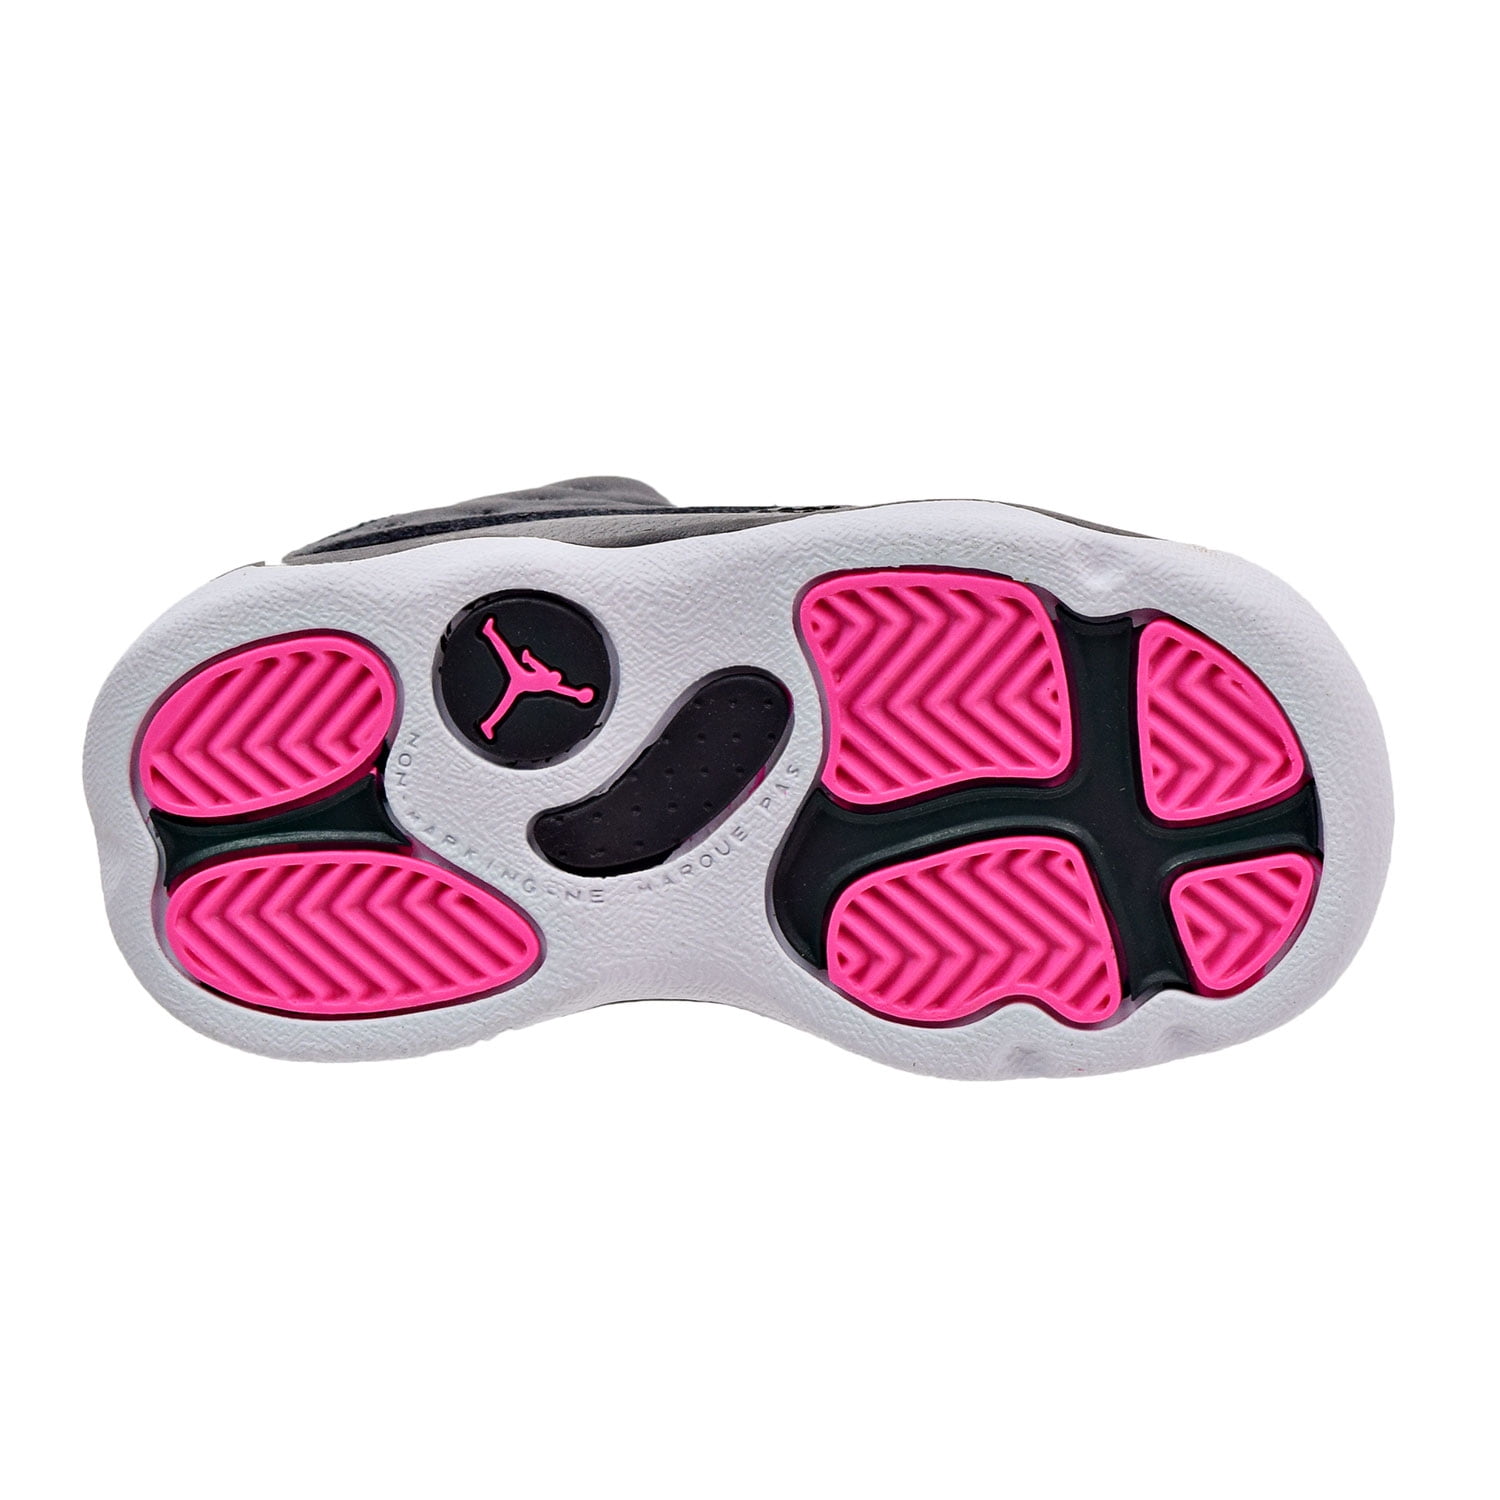 Air Jordan Retro 13 GG 'Hyper Pink' Shoes - Size 7Y